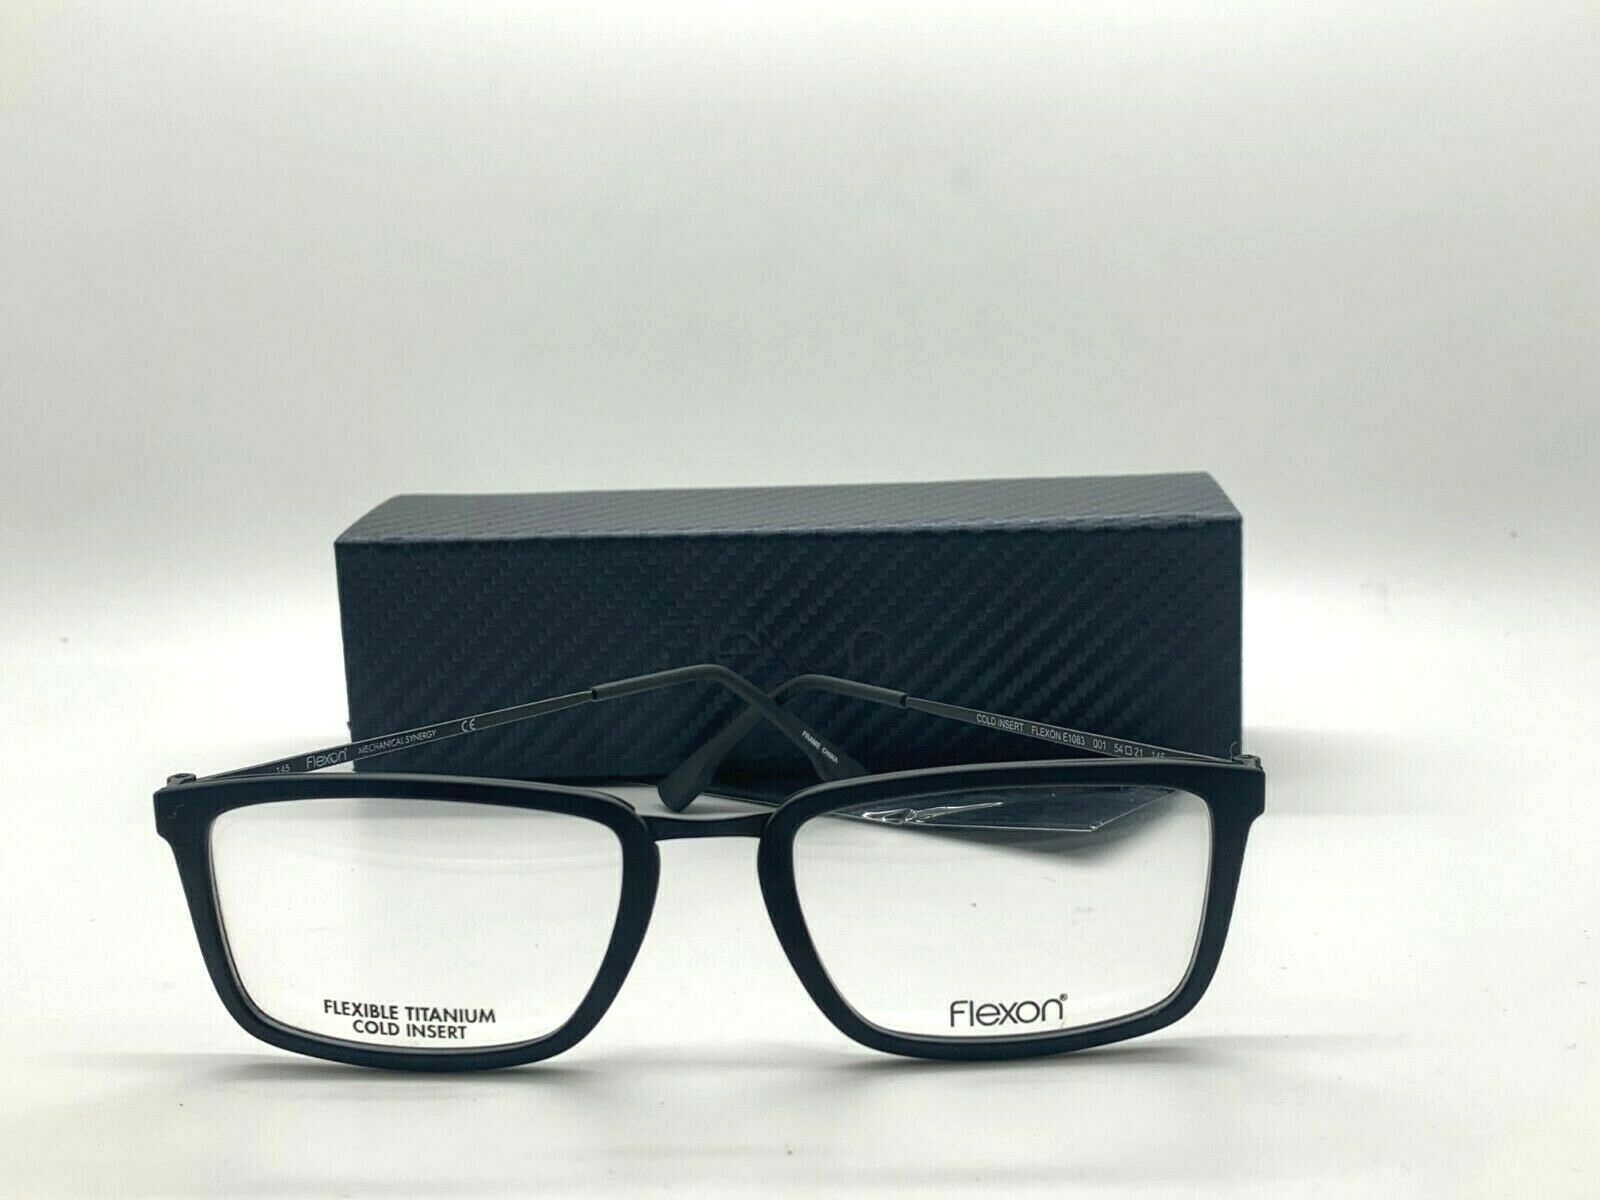 NEW FLEXON E1083 001 BLACK FLEXIBLE TITANIUM COLD INSERT Eyeglasses